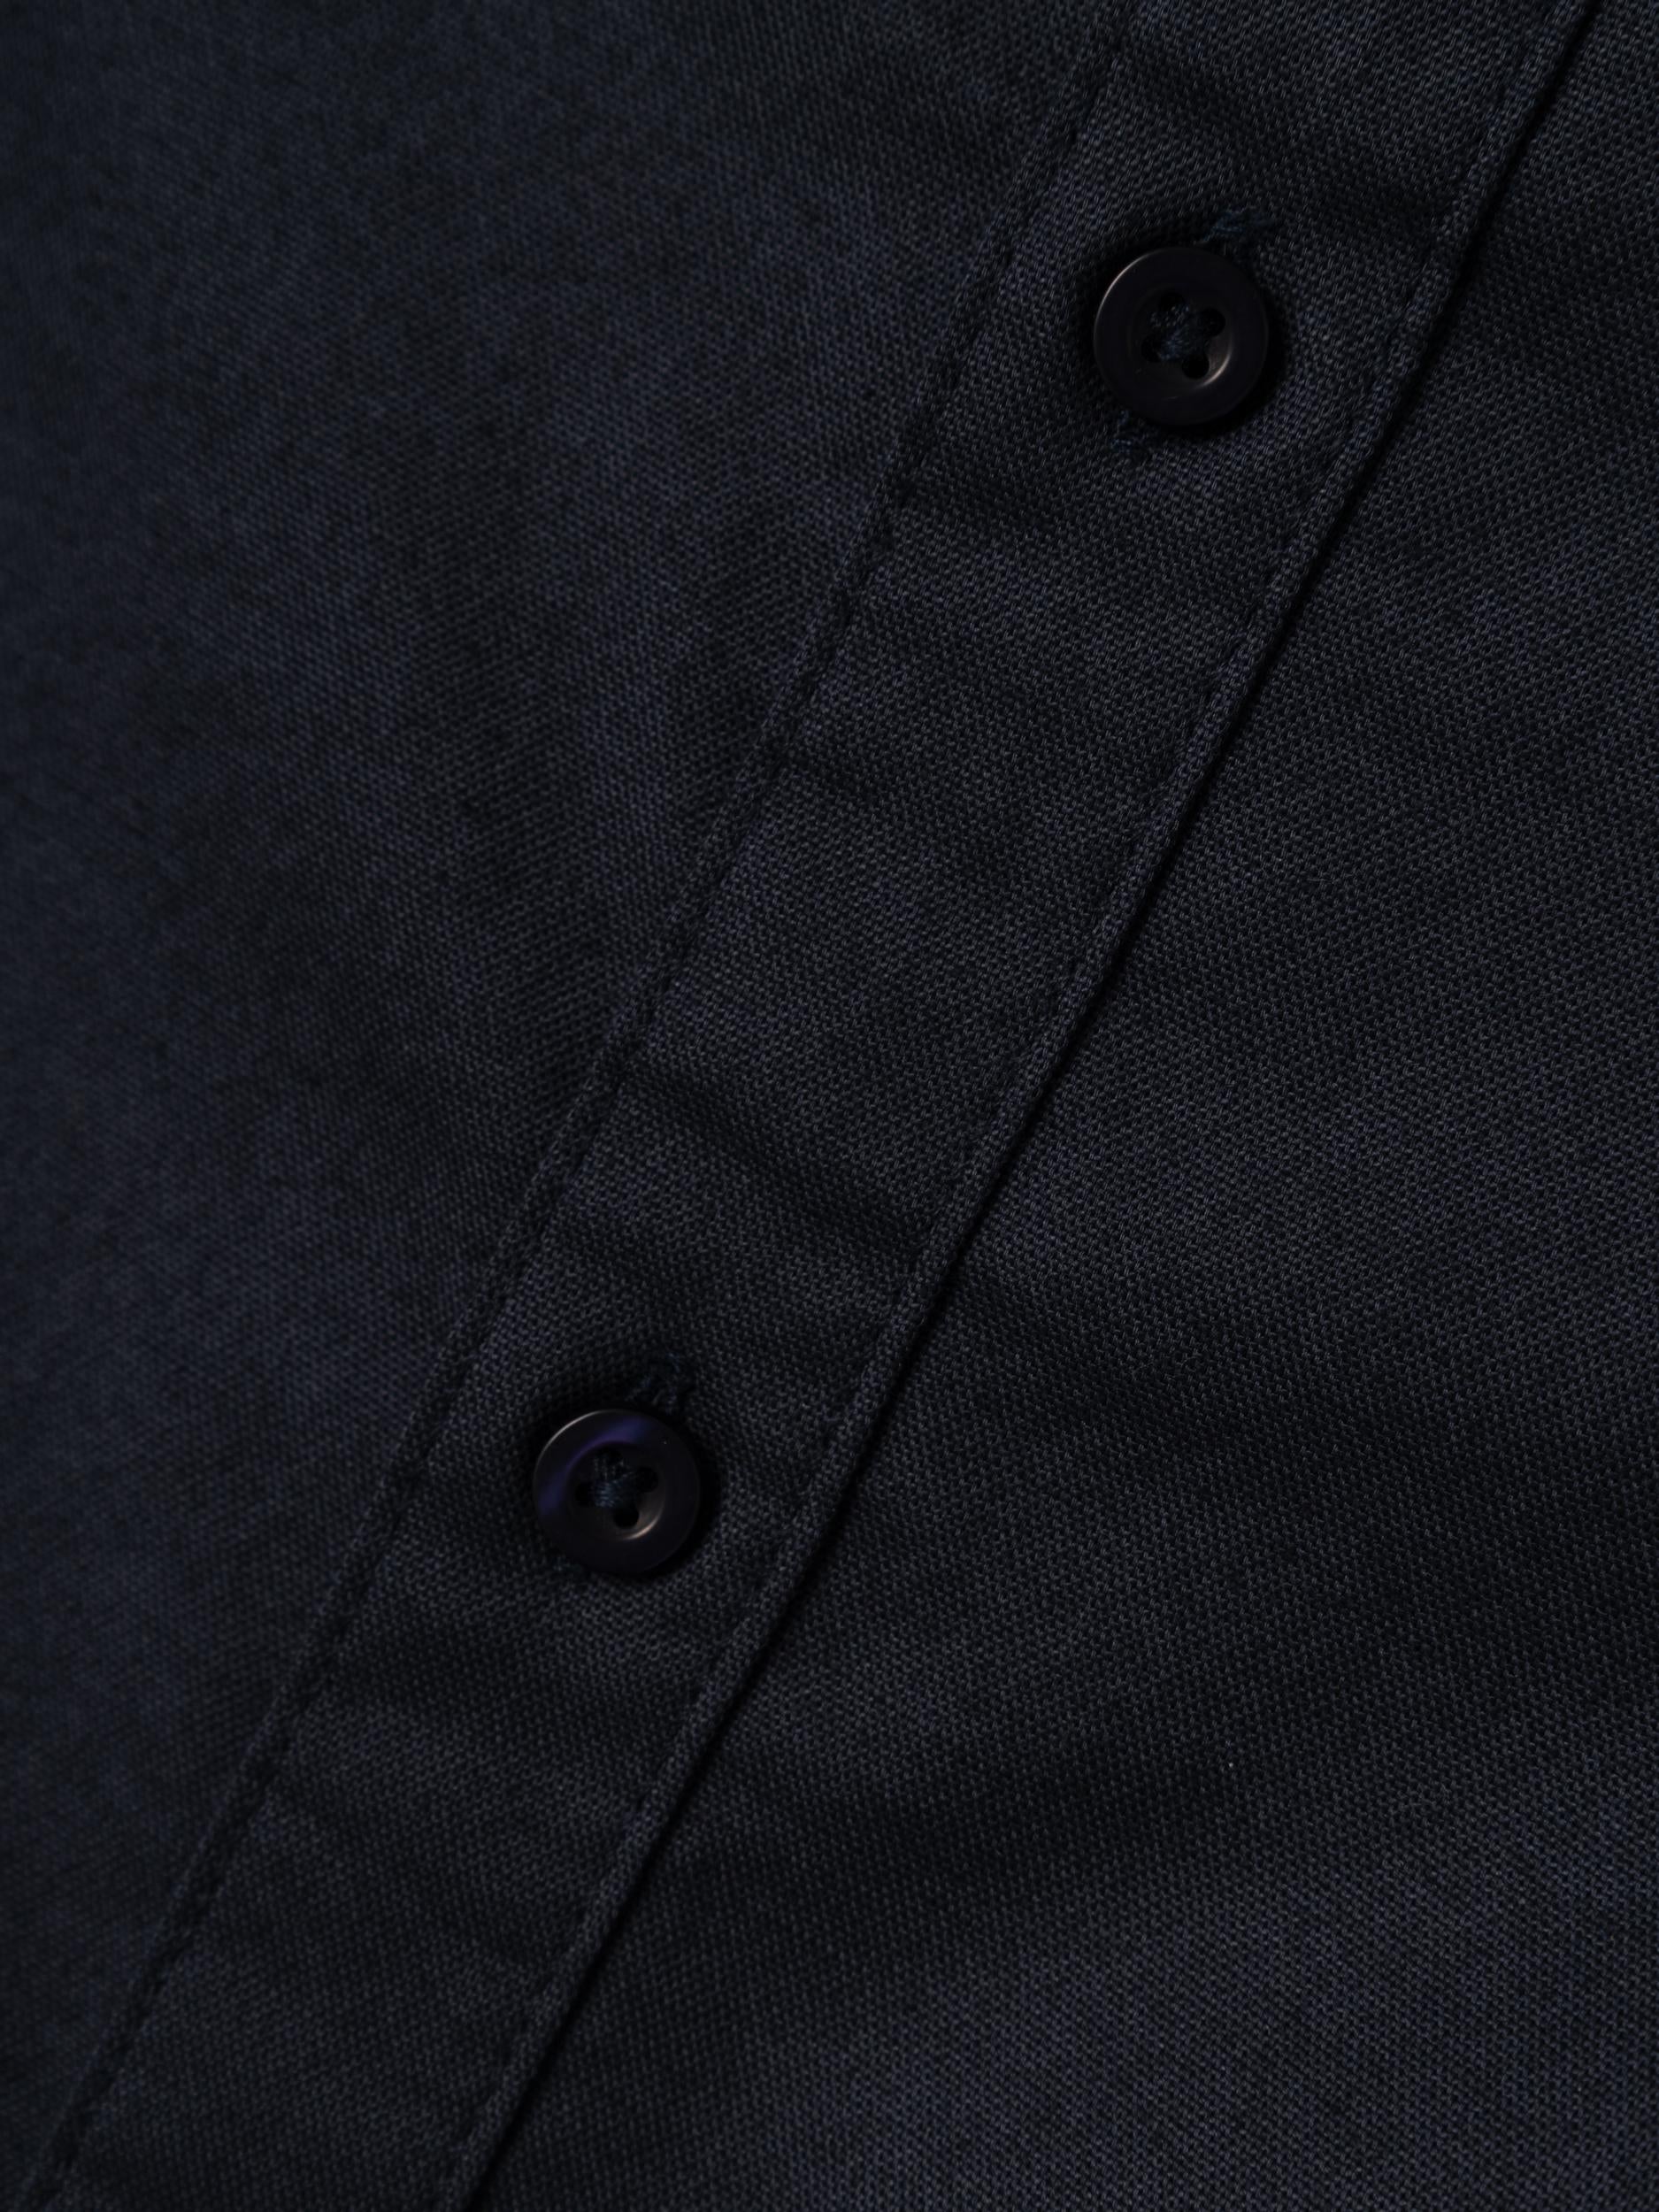 Rekid India Ink Shirt-Button detail